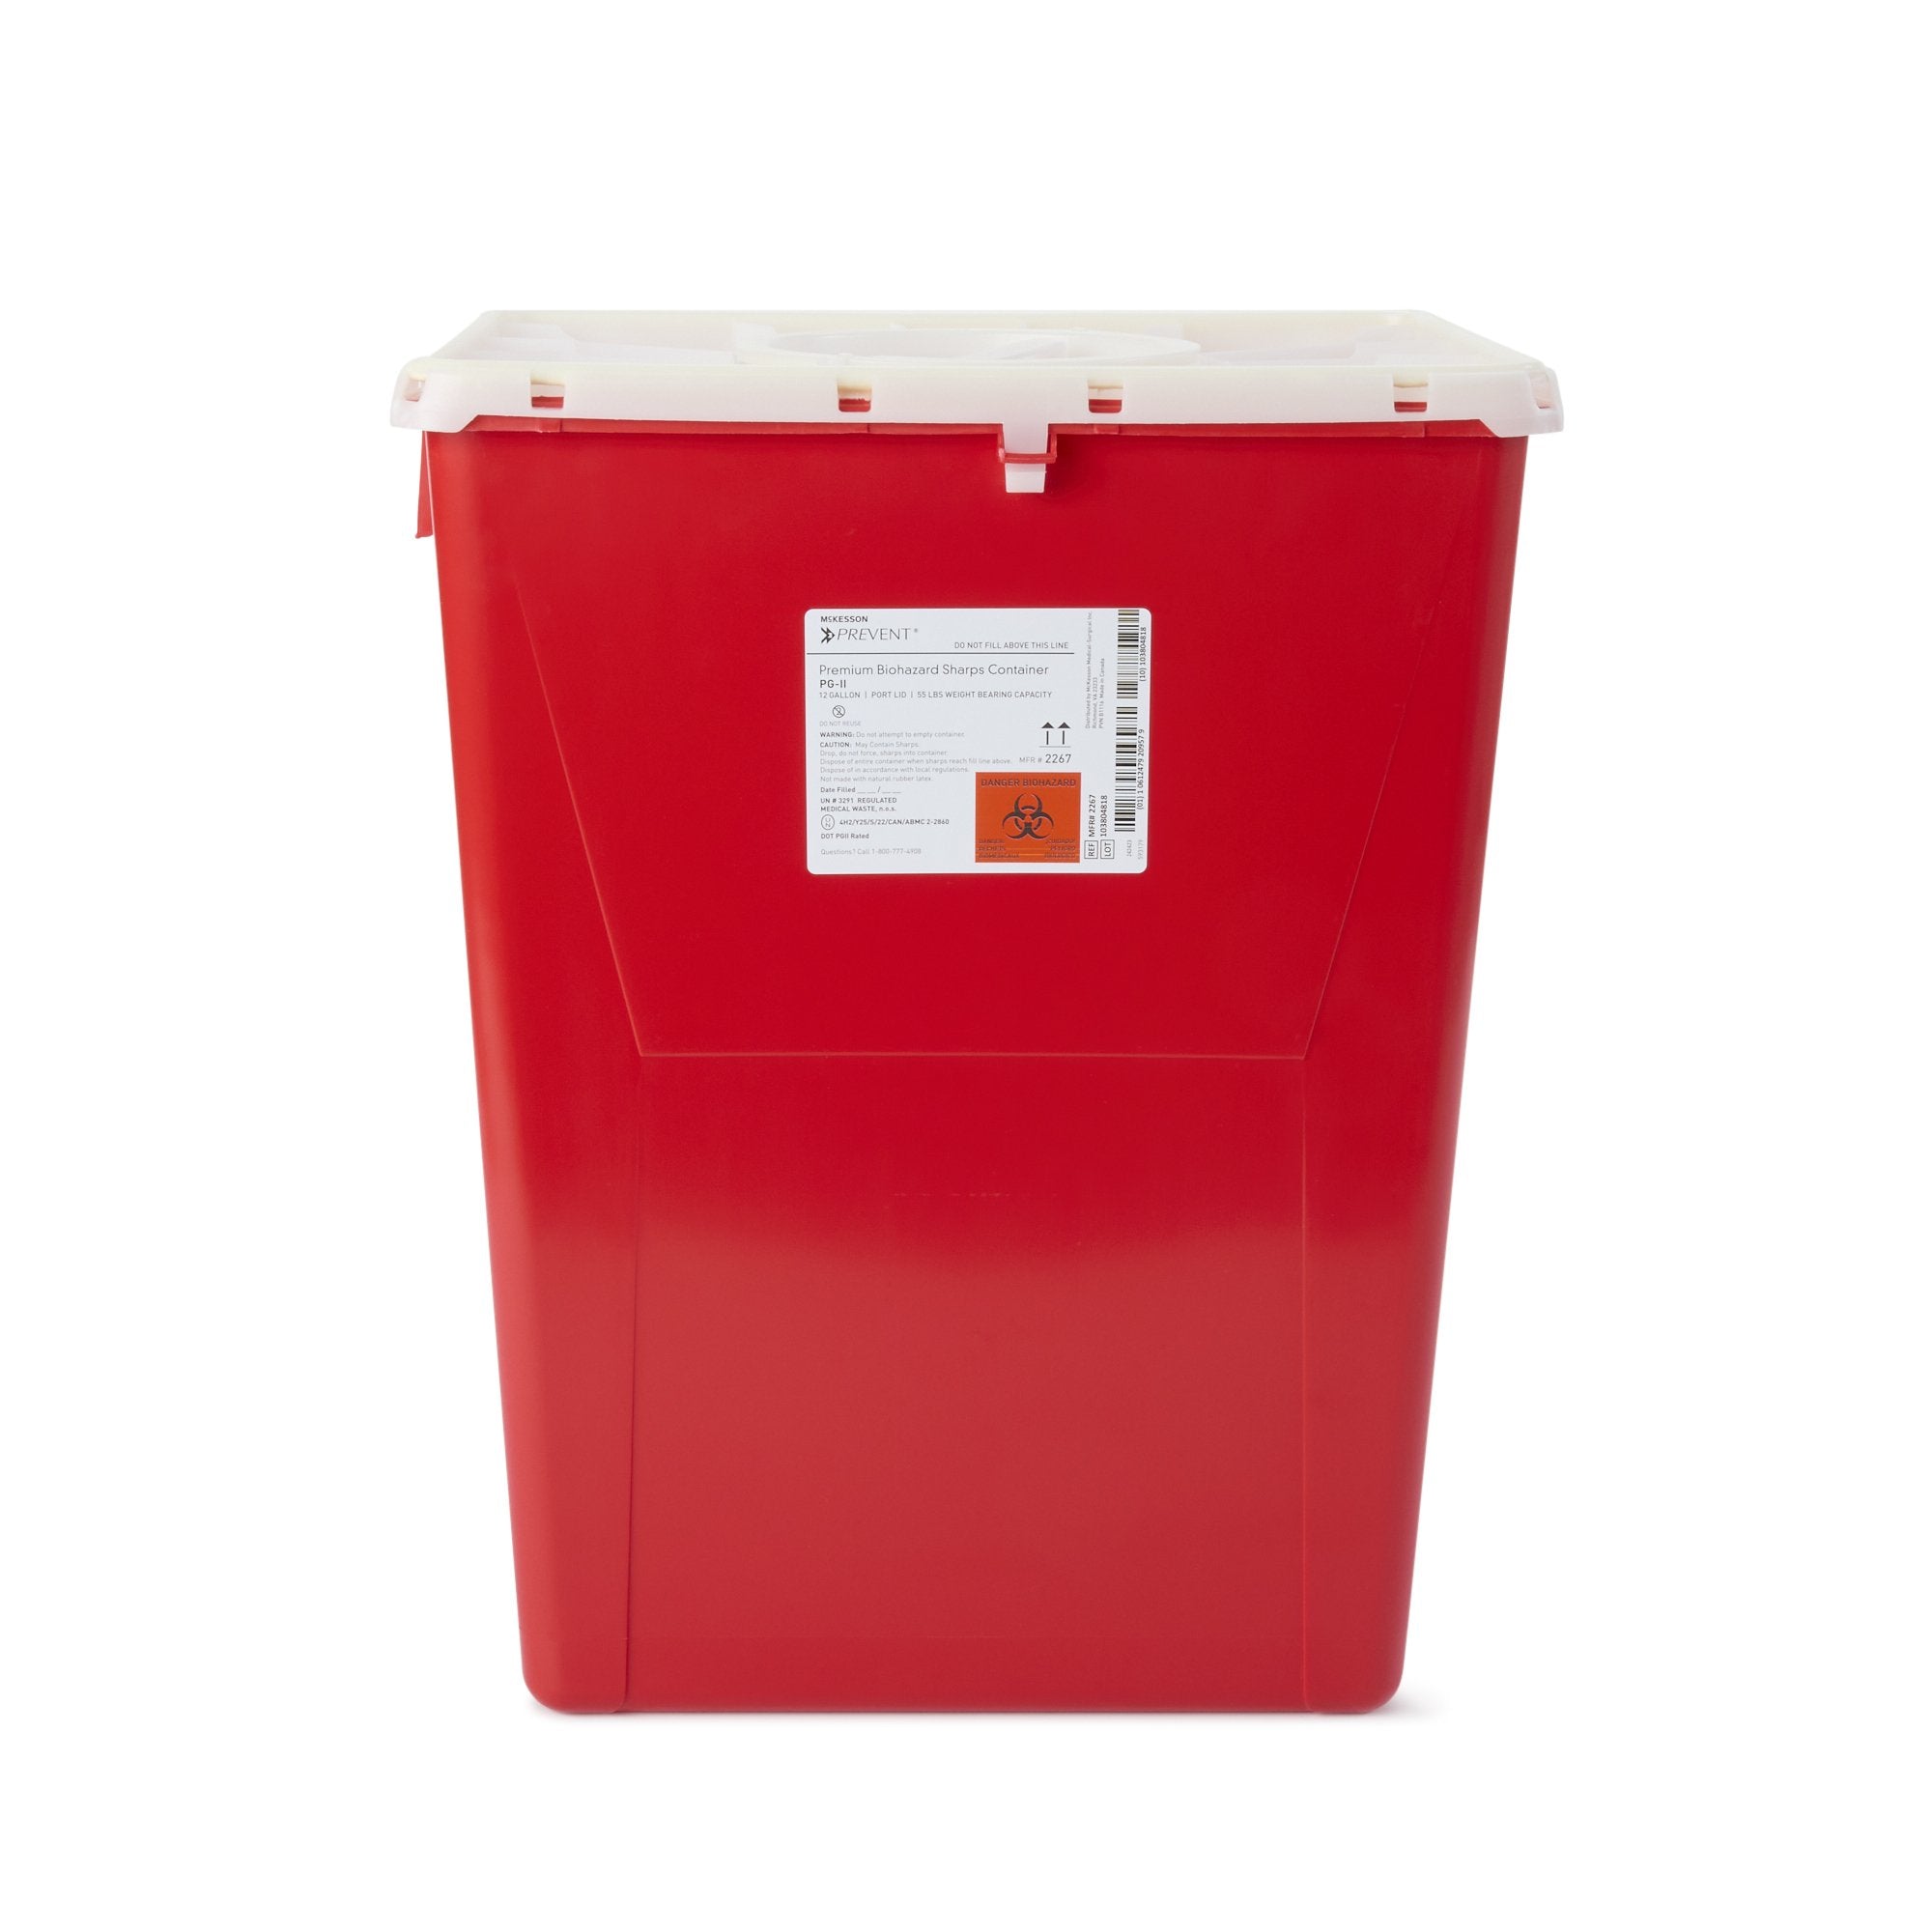 Sharps Container McKesson Prevent® Red Base 20-4/5 H X 17-3/10 W X 13 L Inch Vertical Entry 12 Gallon